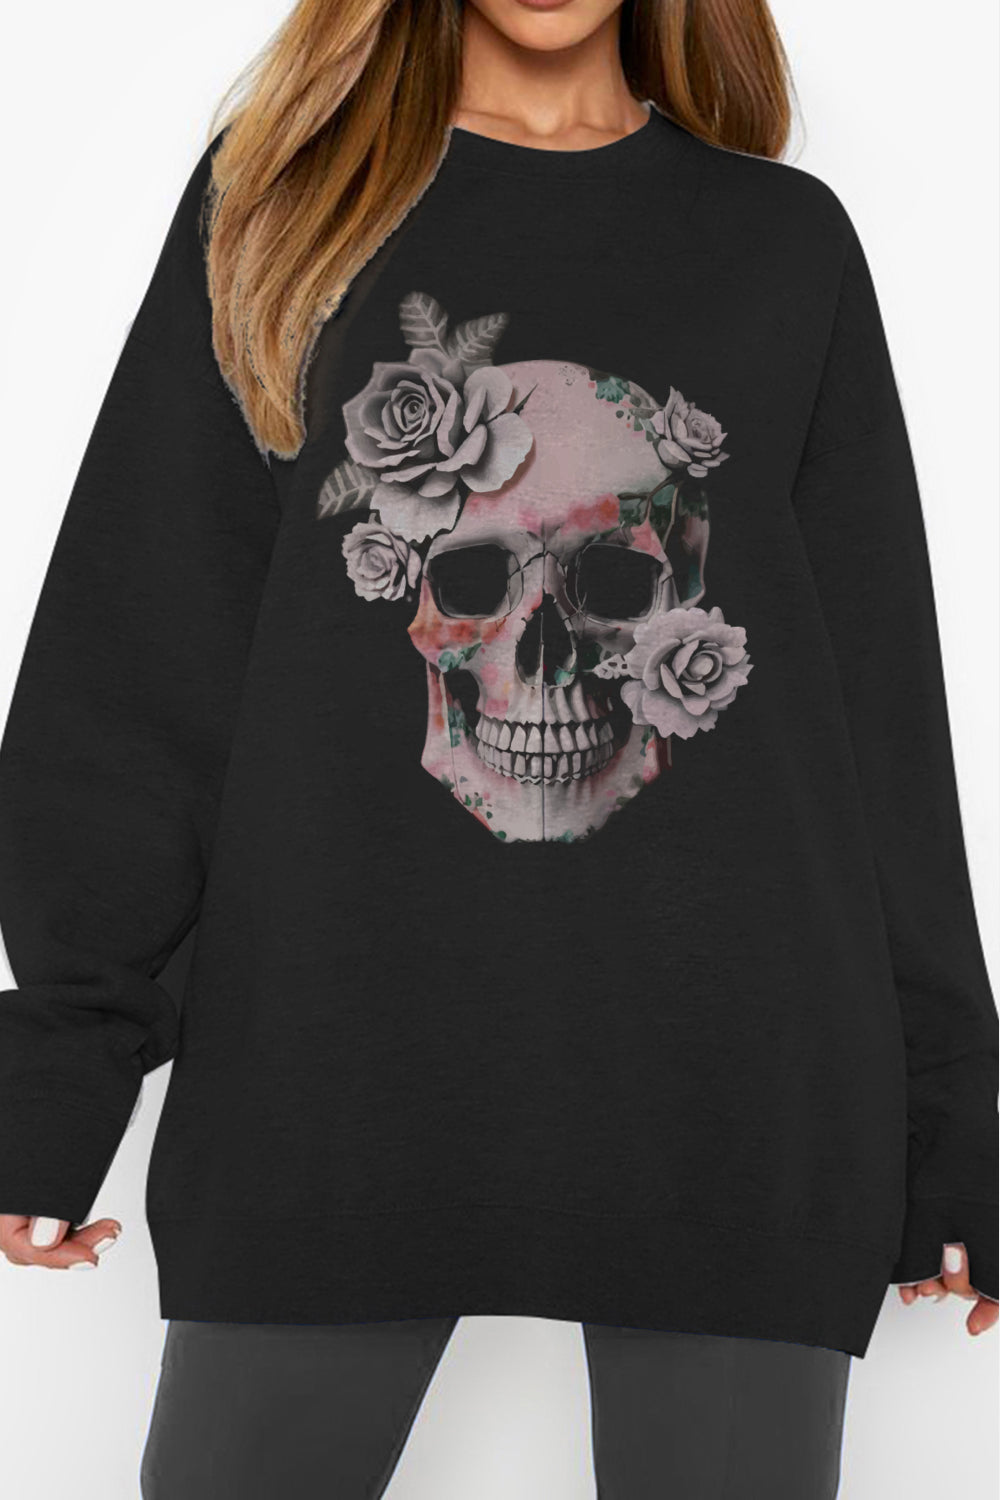 Simply Love Simply Love Full Size Dropped Shoulder SKULL Graphic Sweatshirt - TiffanyzKlozet